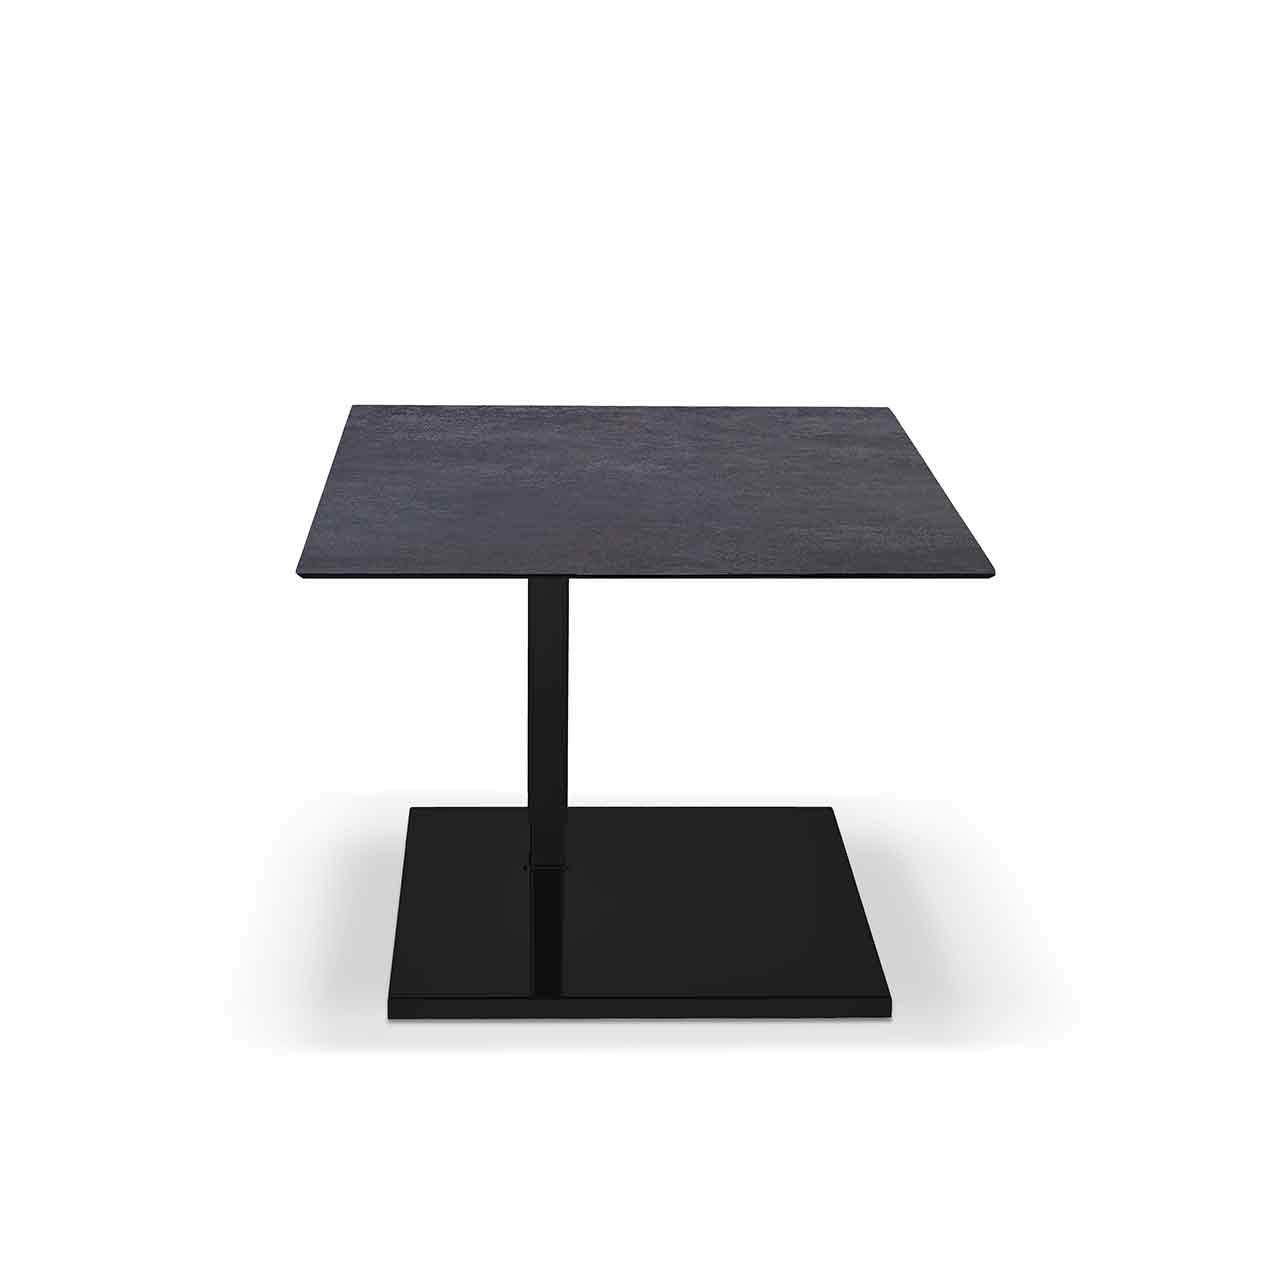 Ronald Schmitt – Beistelltisch Kolo K 726 - unten | Tischplatte Keramik Zement anthrazit Sockel schwarz 